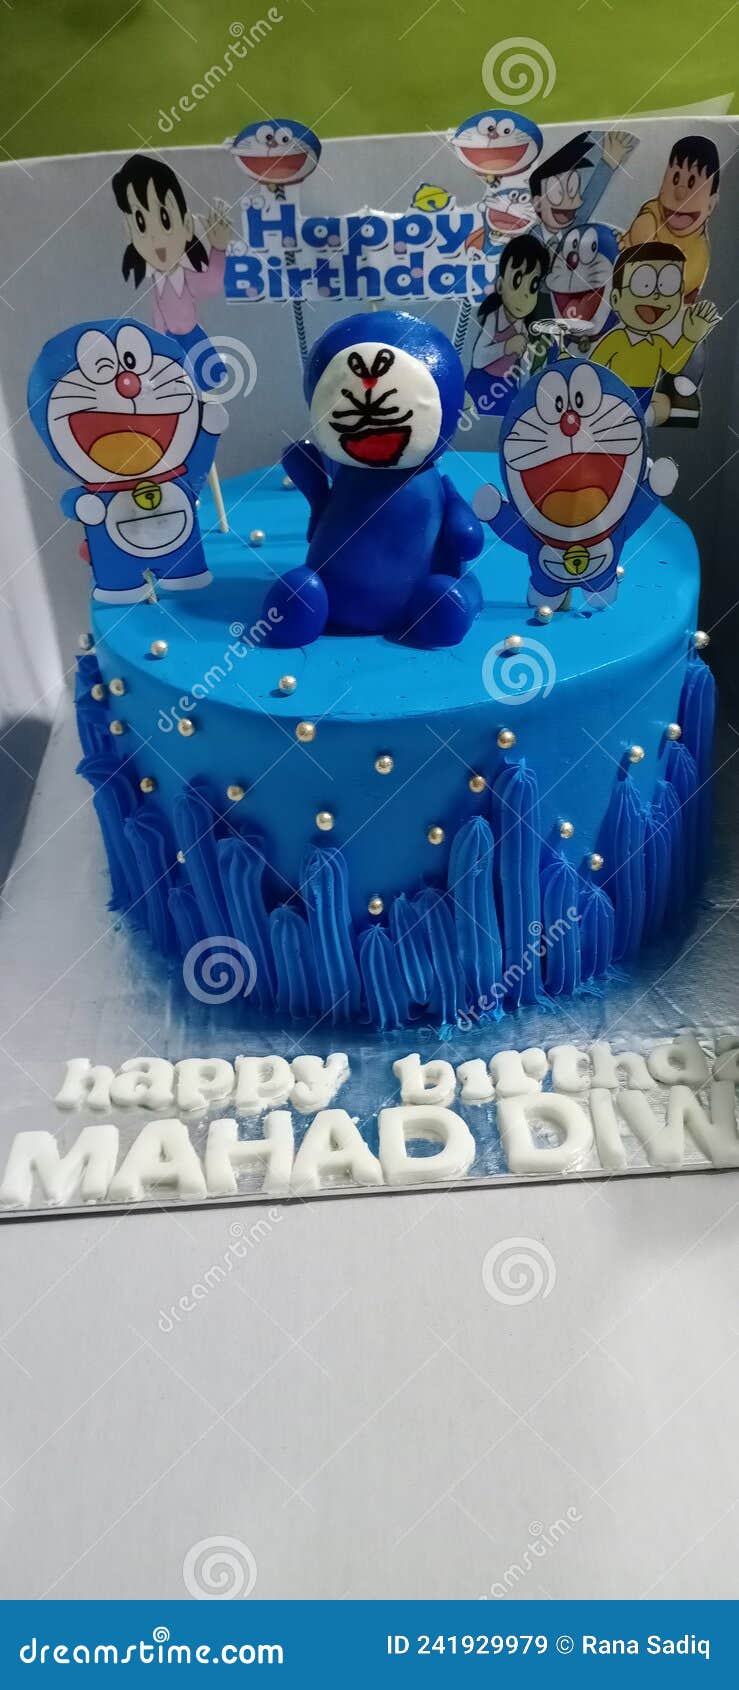 Doraemon Cake | Celebratebigday.com